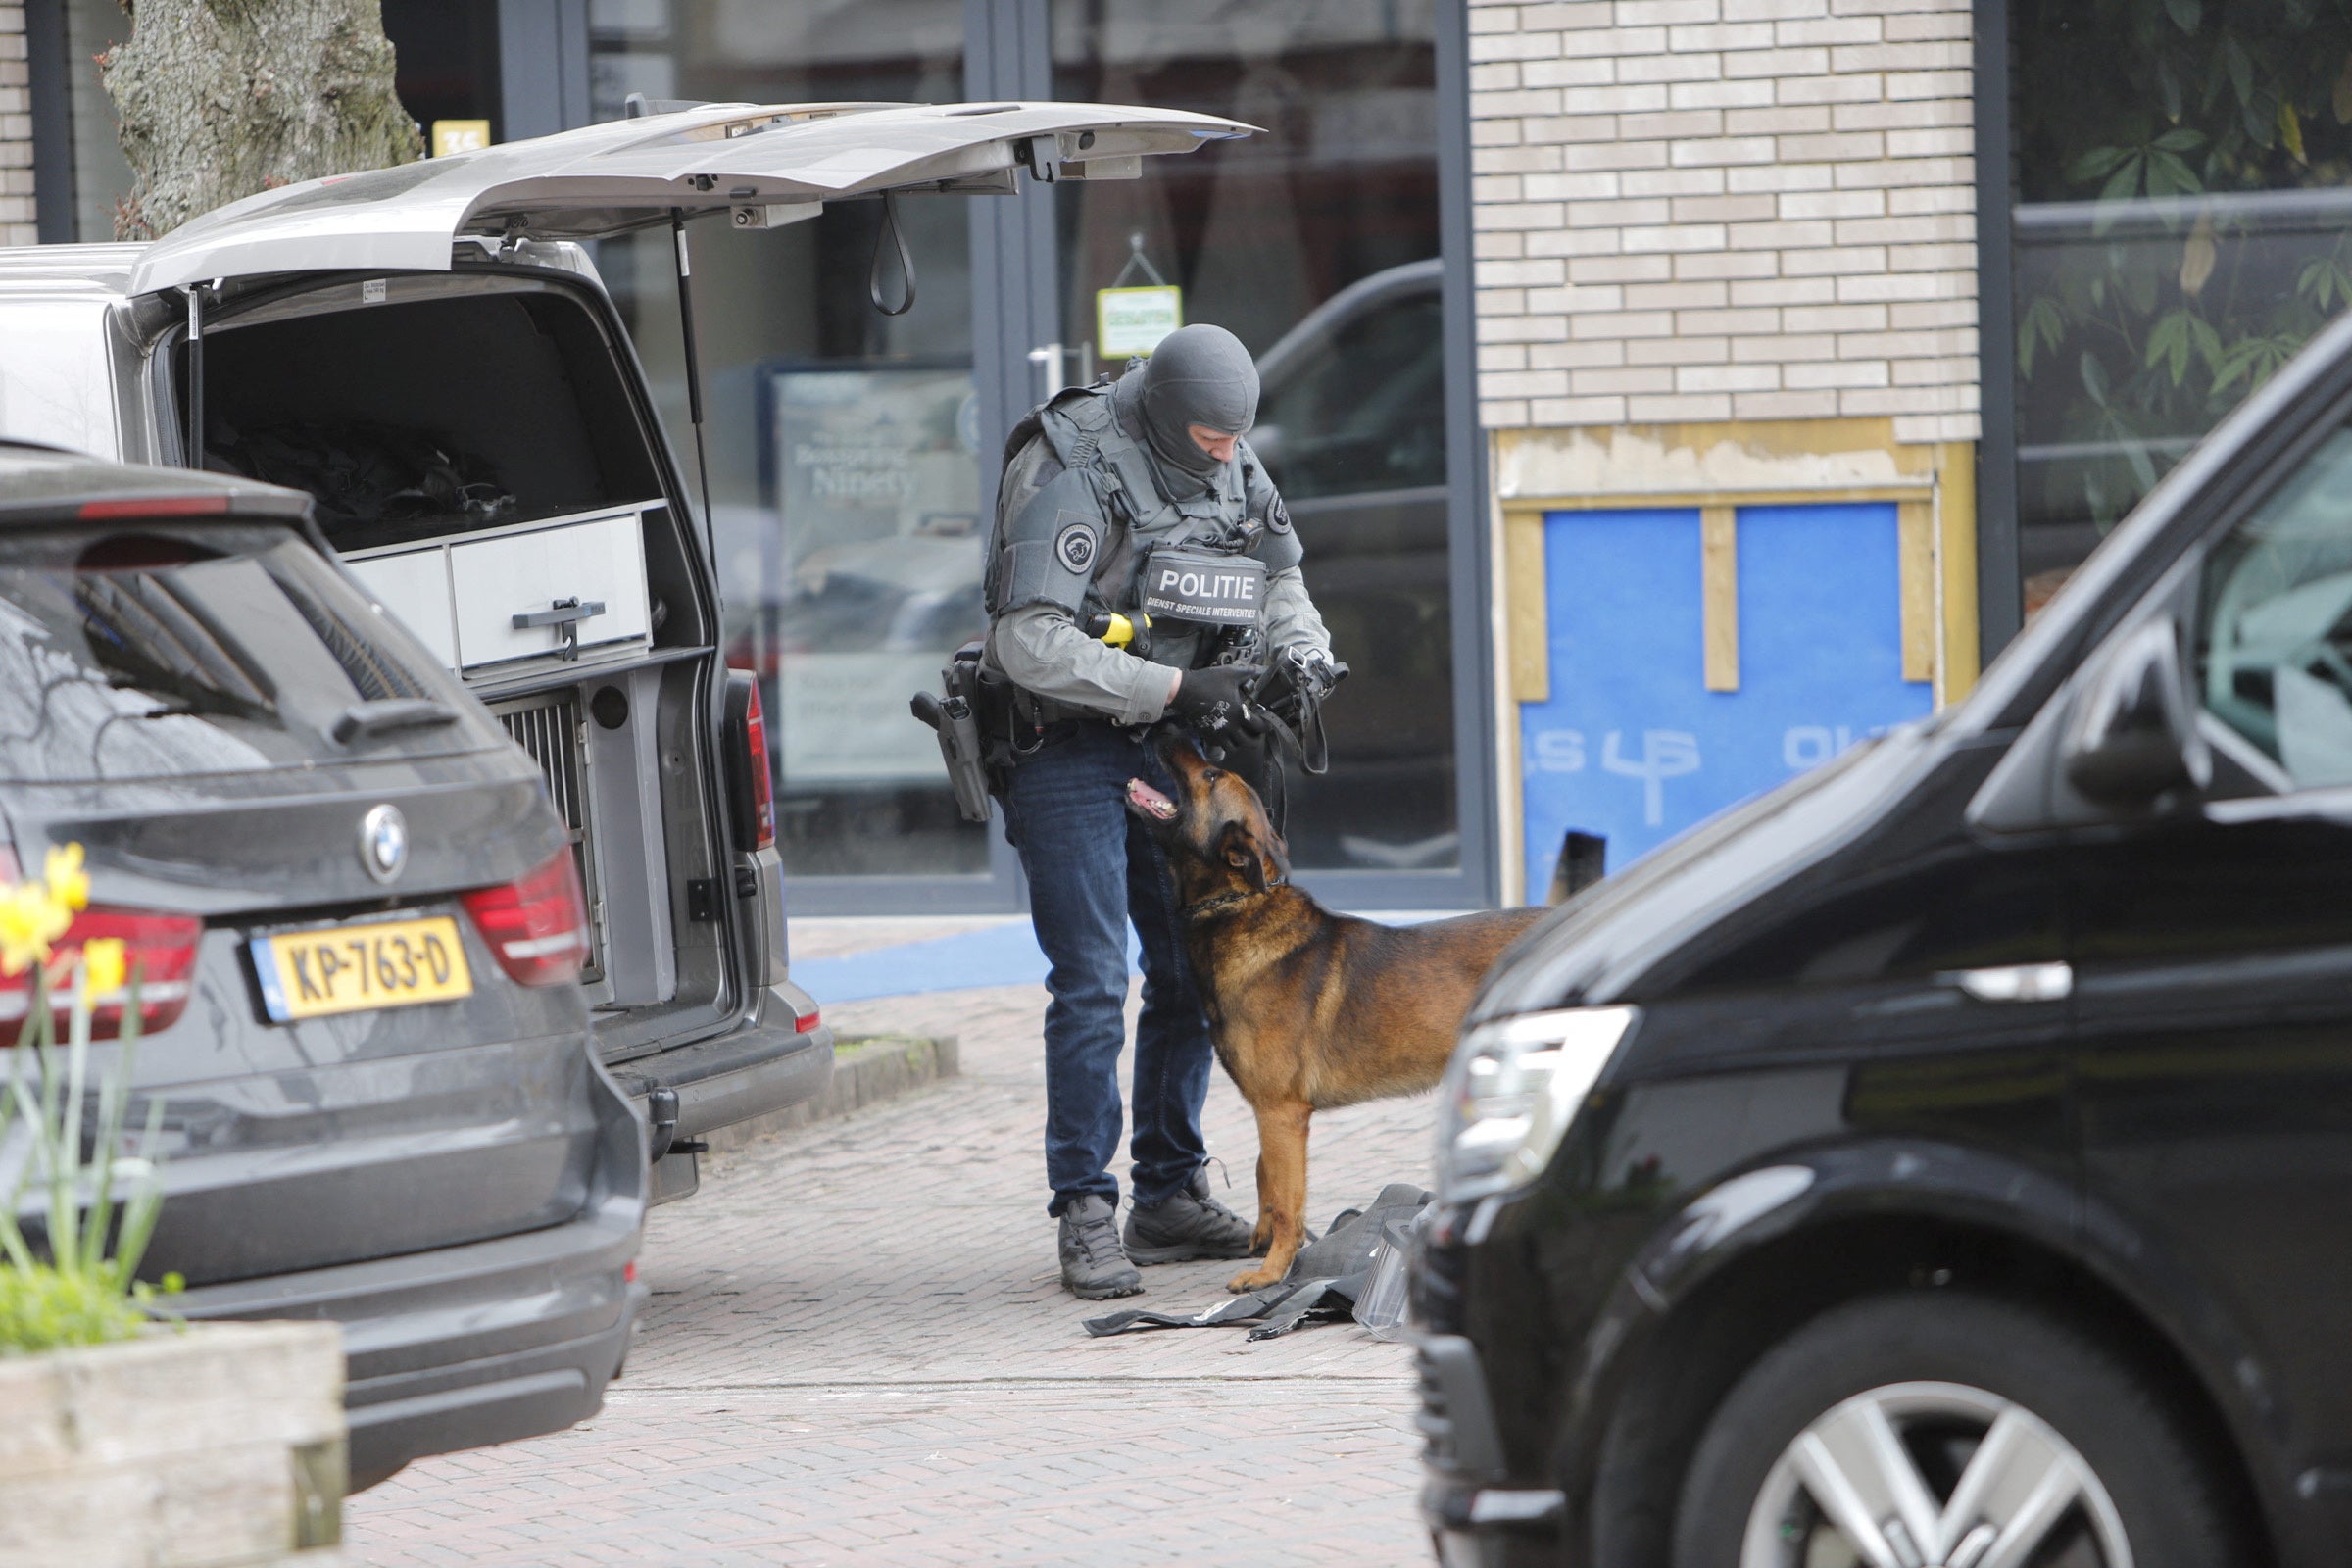 An armoured police officer handles a police dog near the Cafe Petticoat